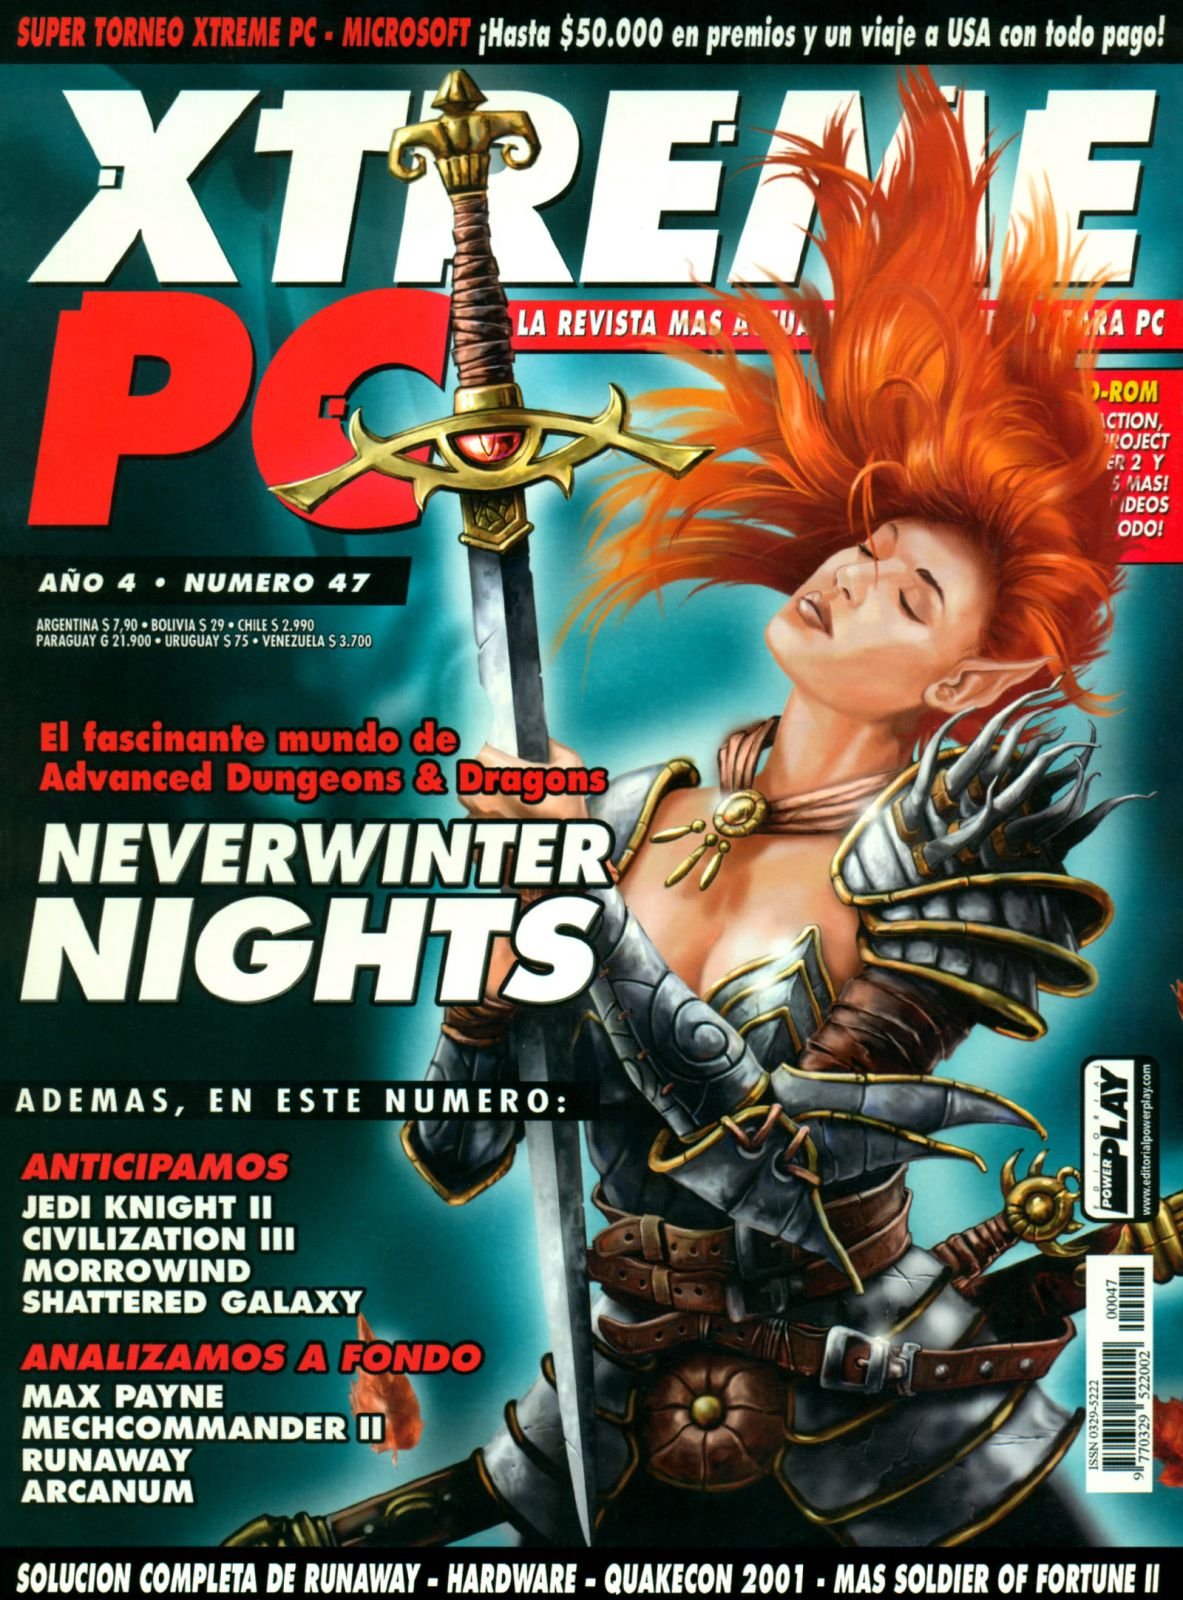 Xtreme PC 47 September 2001